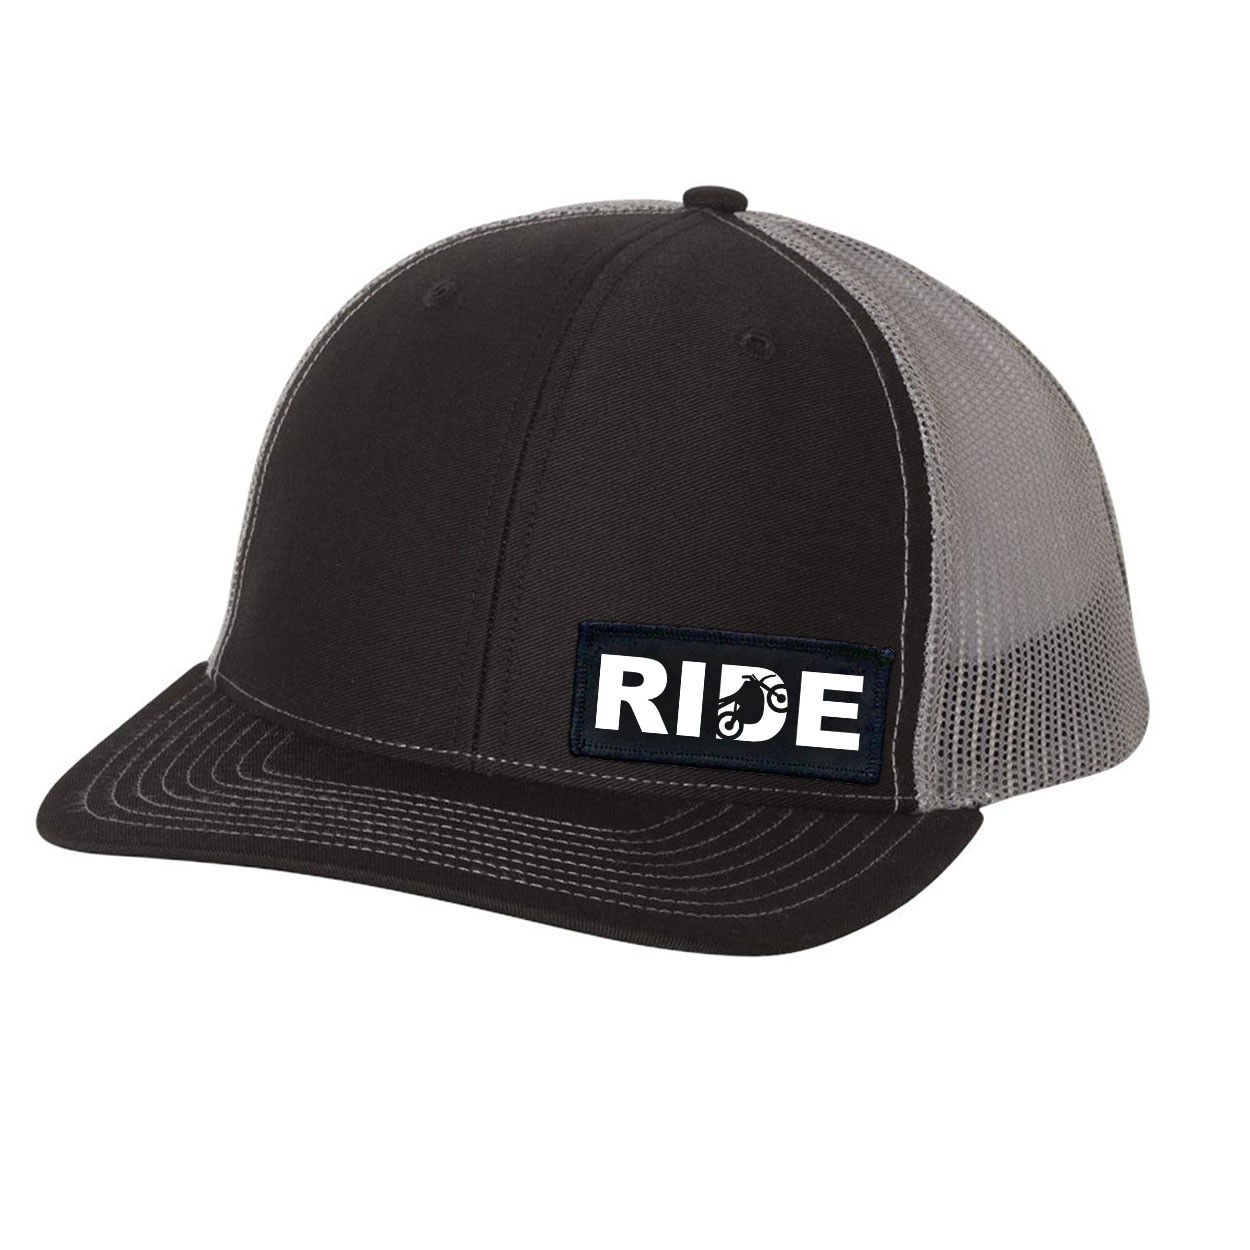 Ride Moto Logo Night Out Woven Patch Snapback Trucker Hat Black/Gray (White Logo)